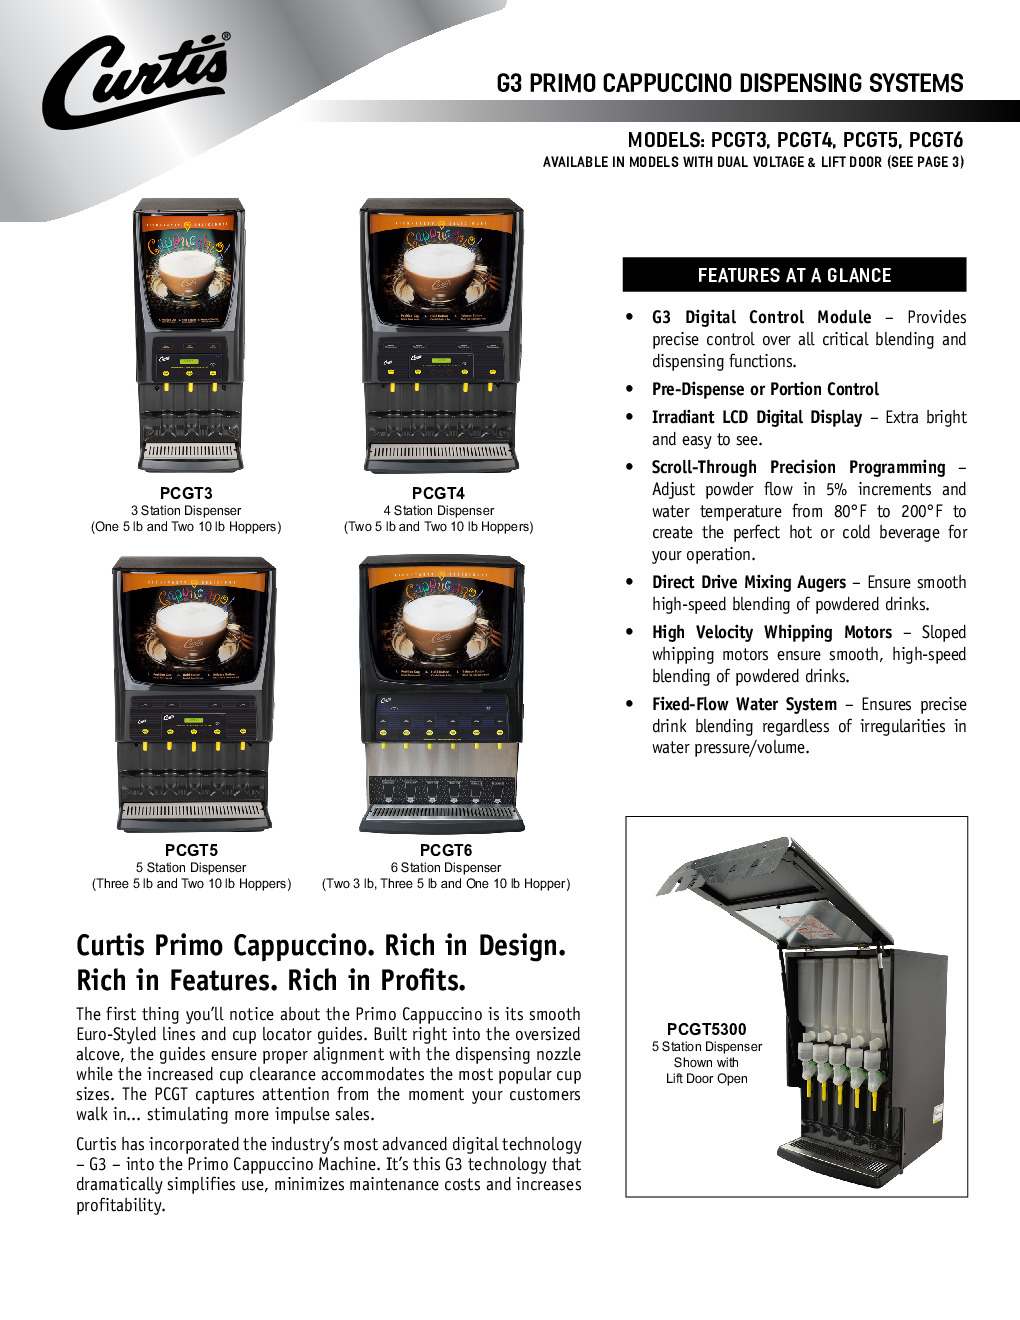 Curtis PCGT6300 Electric (Hot) Beverage Dispenser